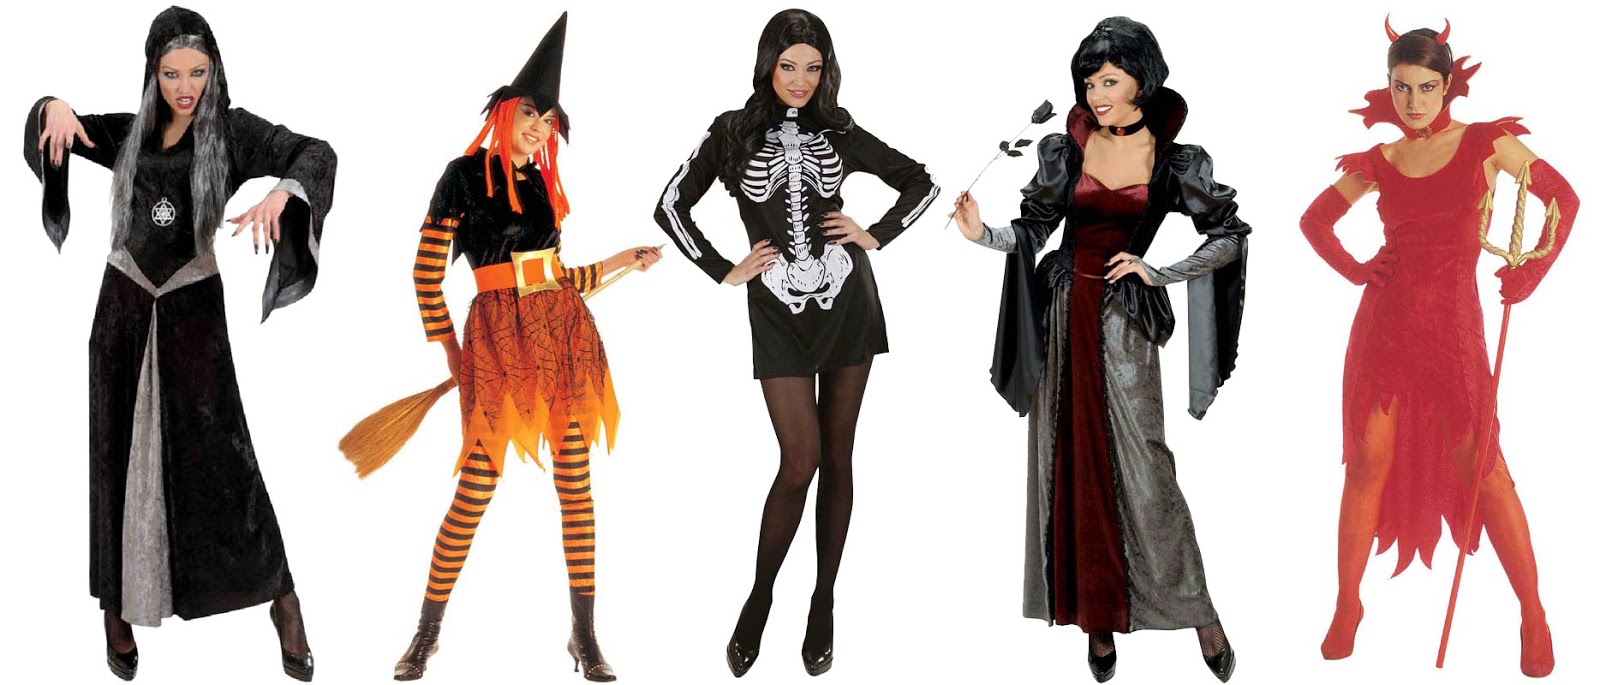  Kvinde kostumer til halloween